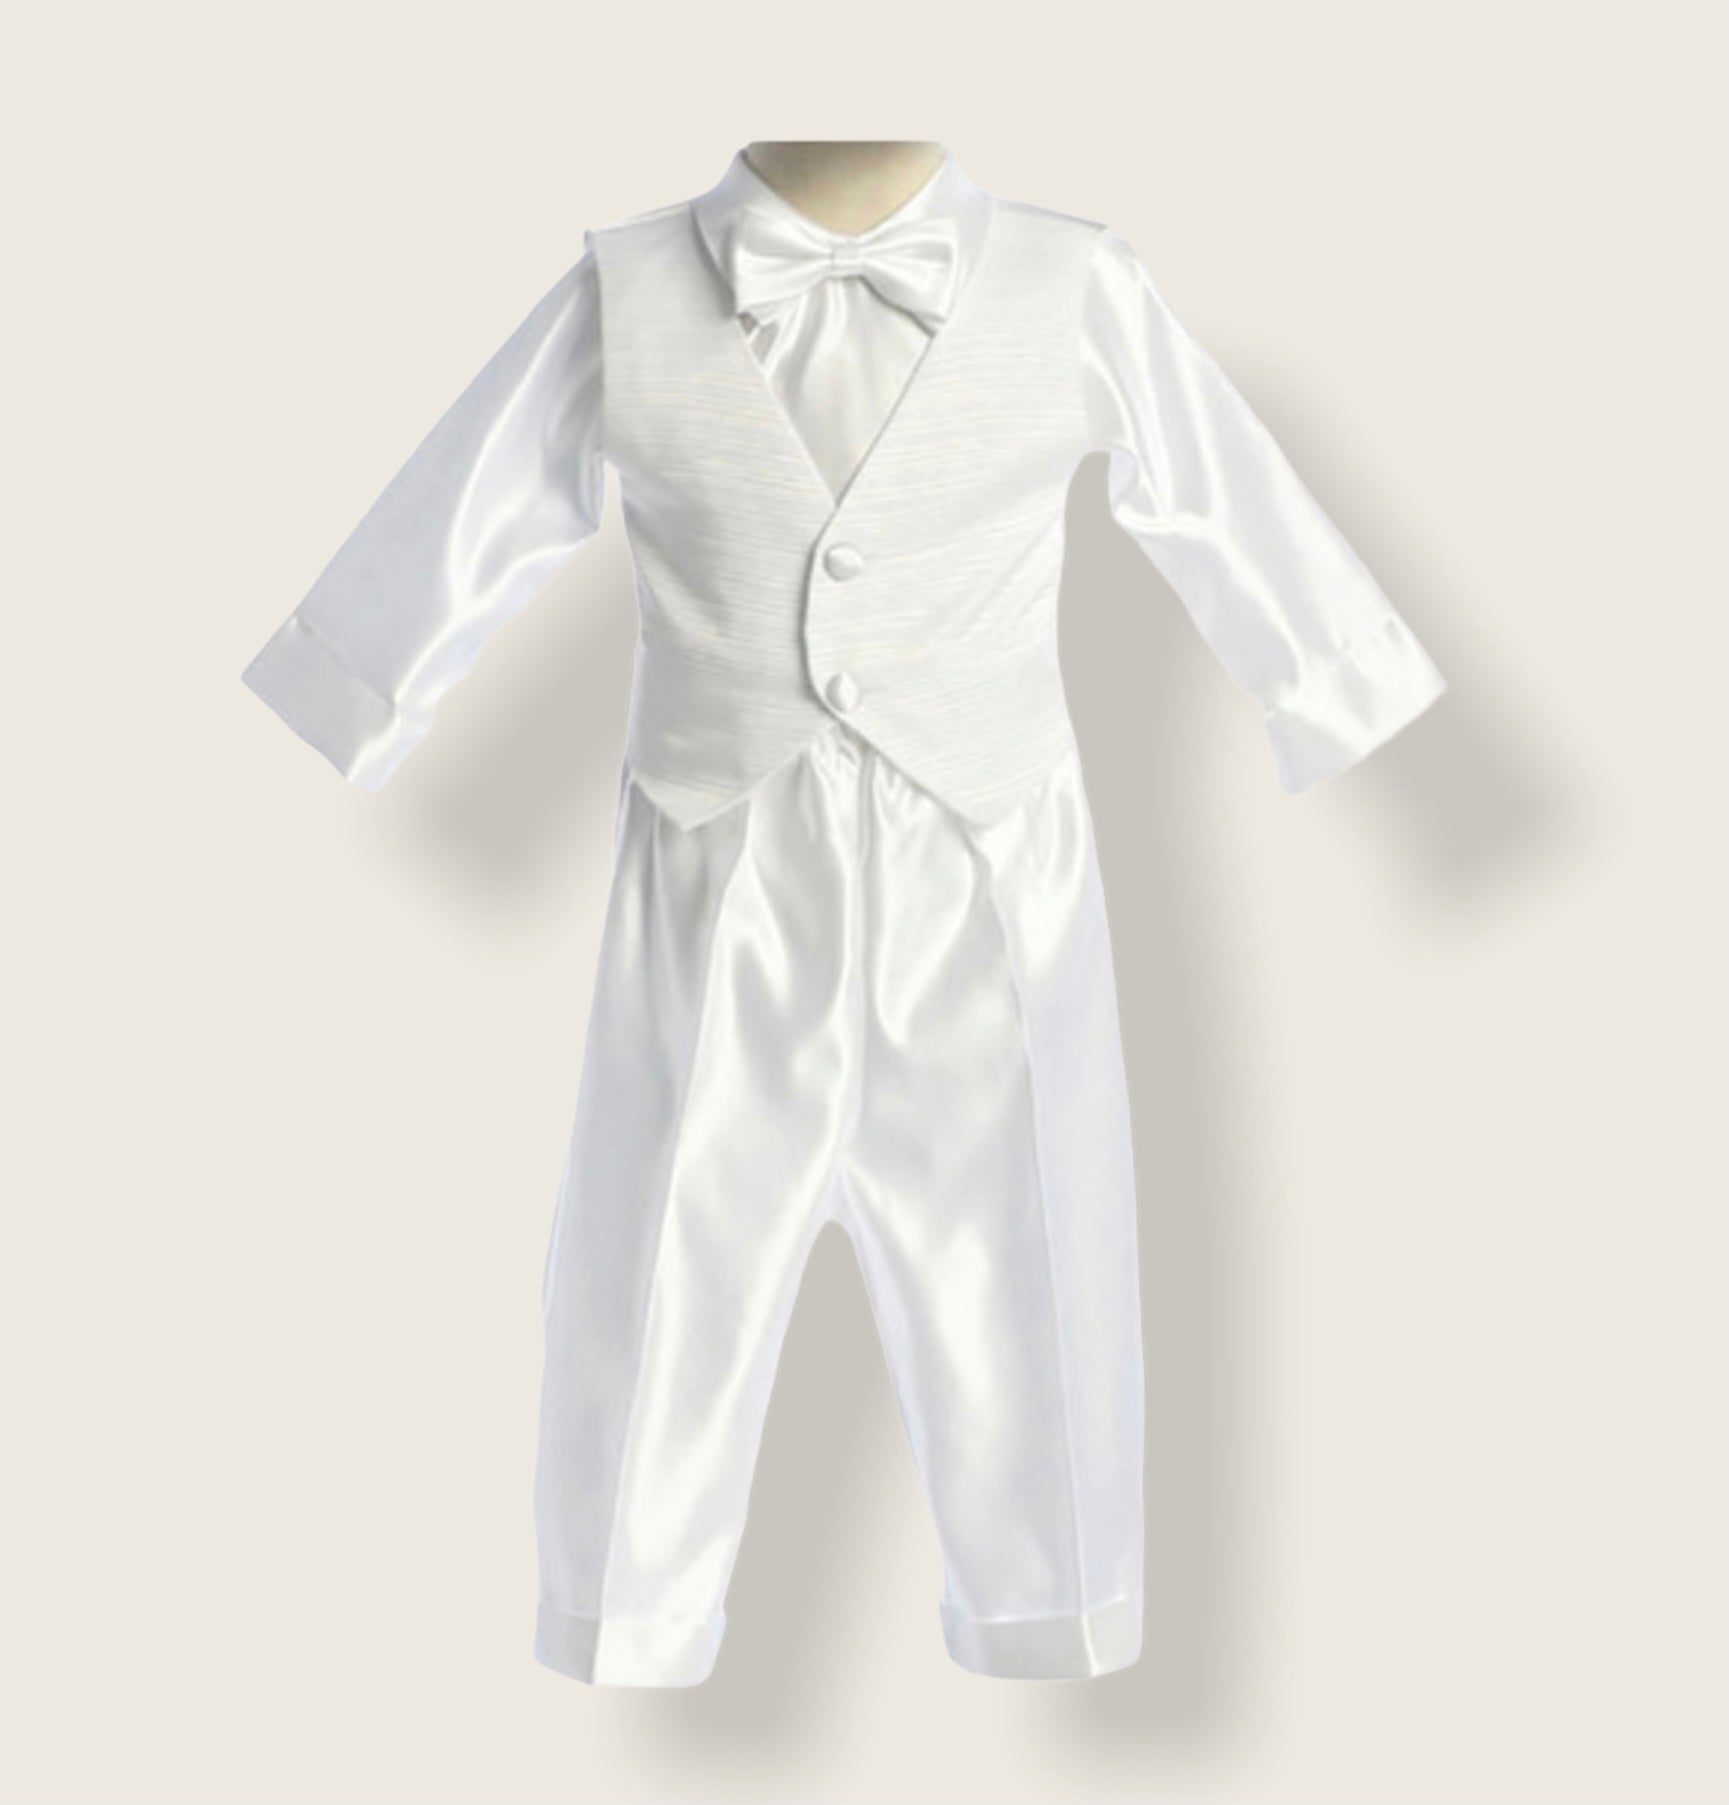 4 piece Satin White Baptismal Suit